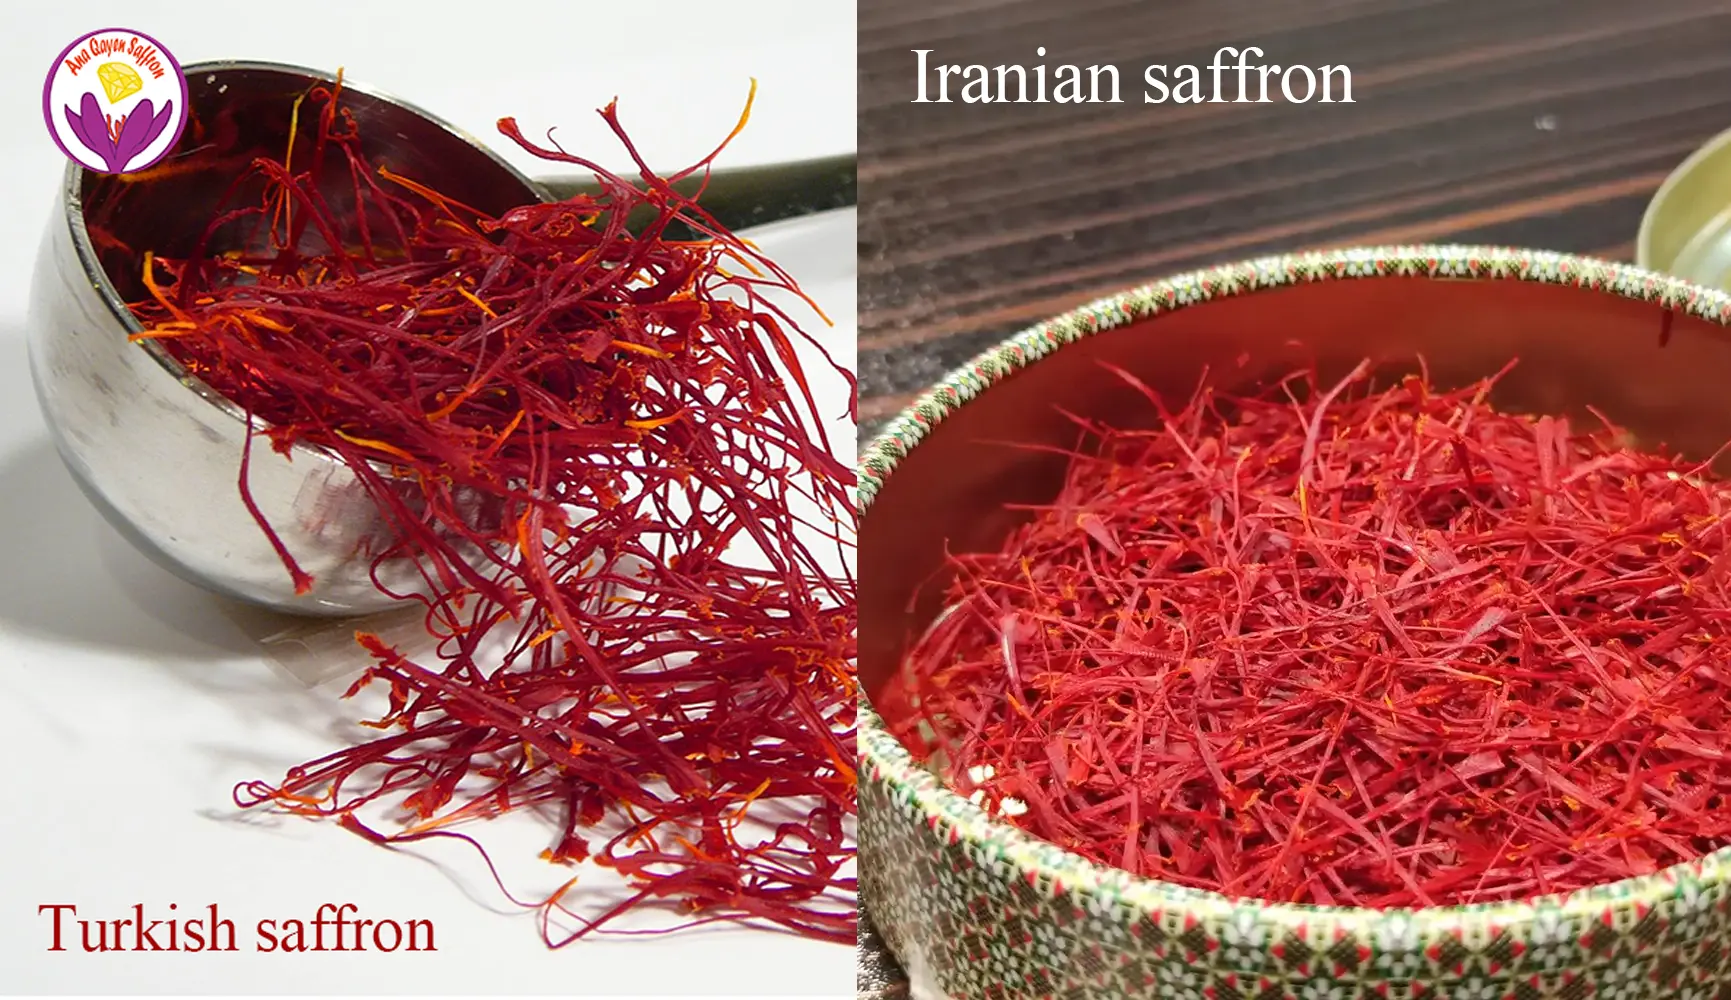 Iranian saffron vs Turkey saffron